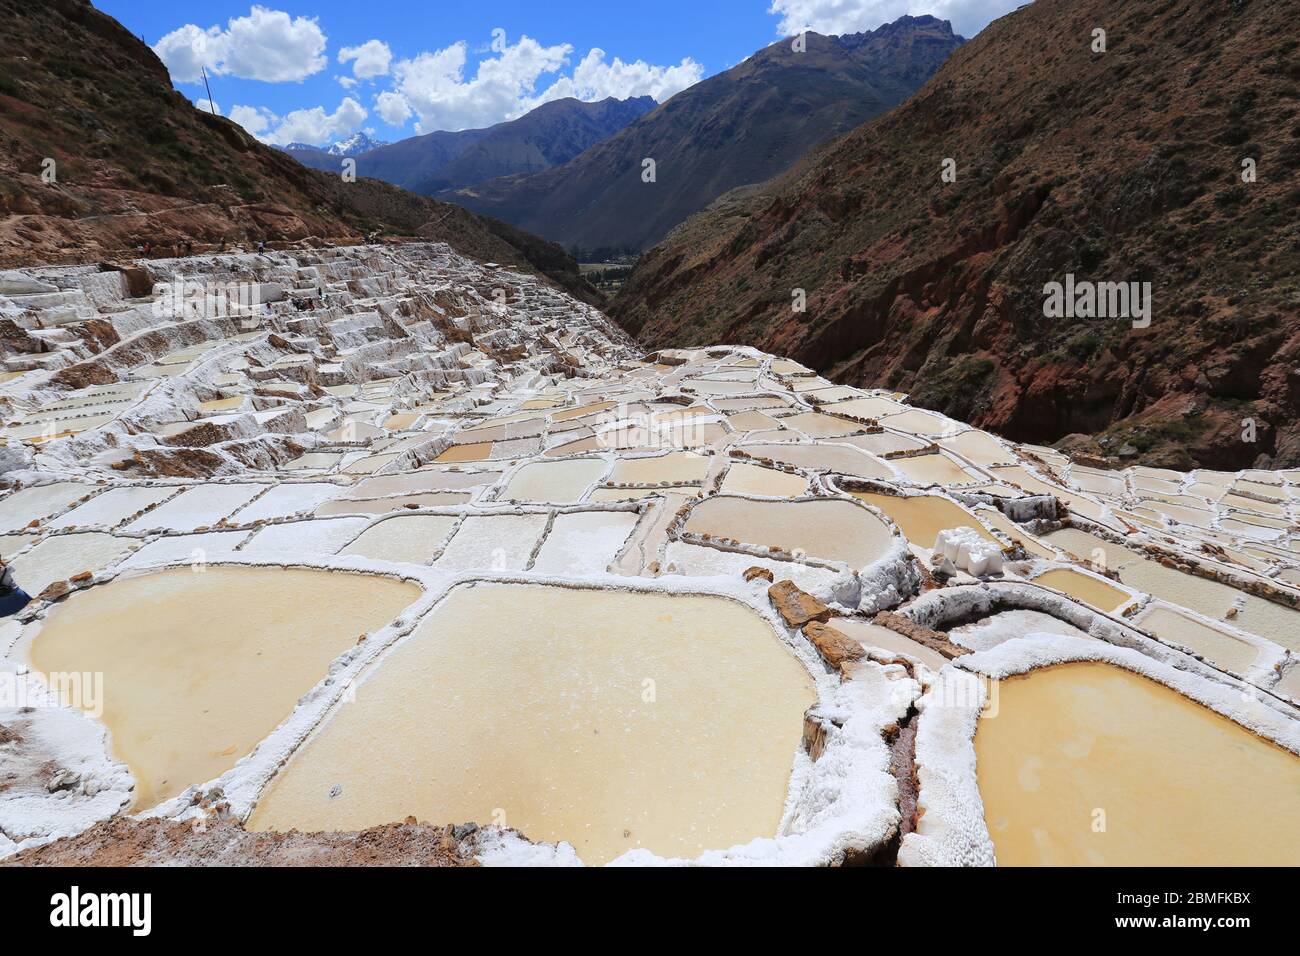 The Inca salt flats of Maras, Peru Stock Photo - Alamy